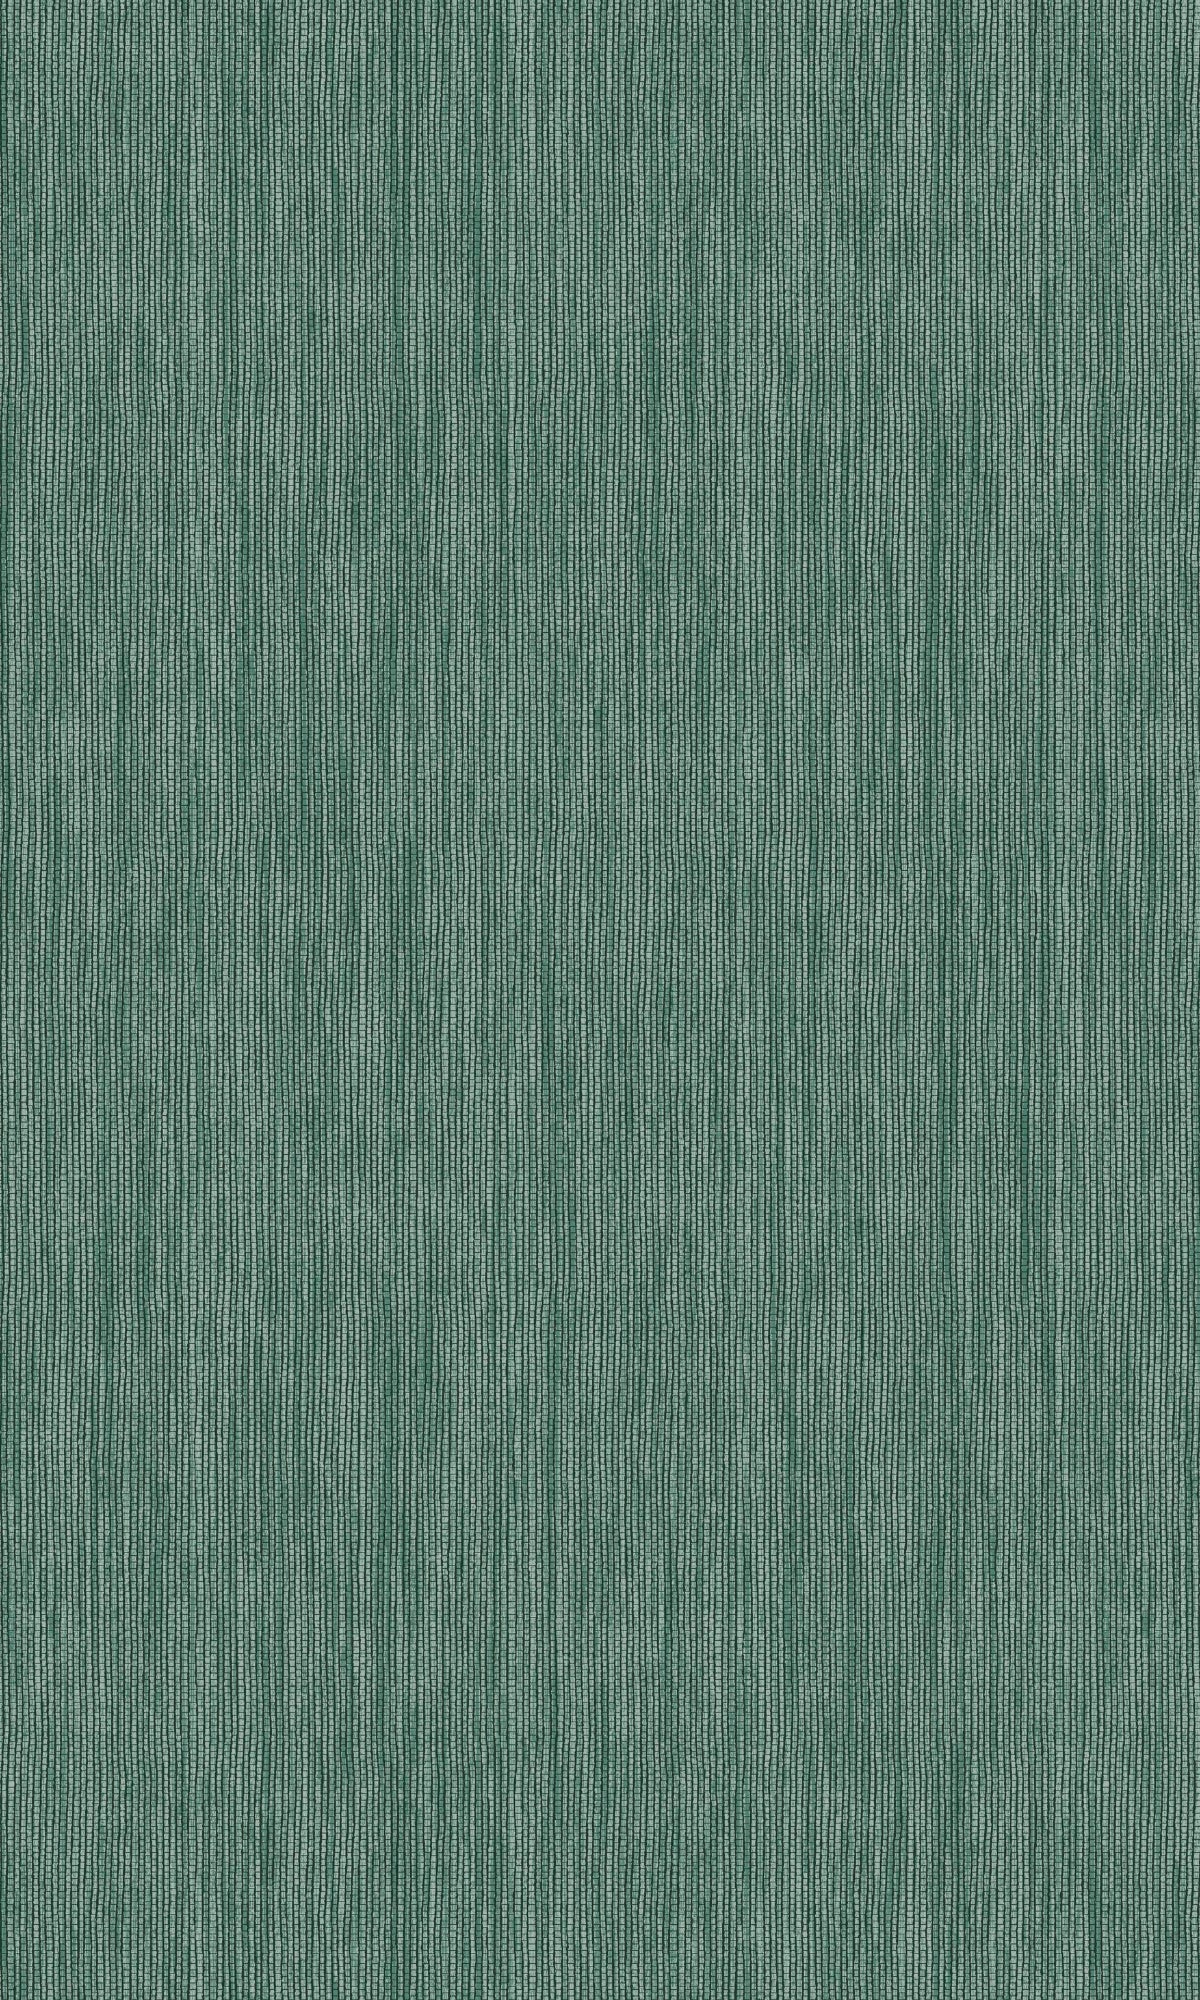 Emerald Plain Textile Textured Wallpaper R9074